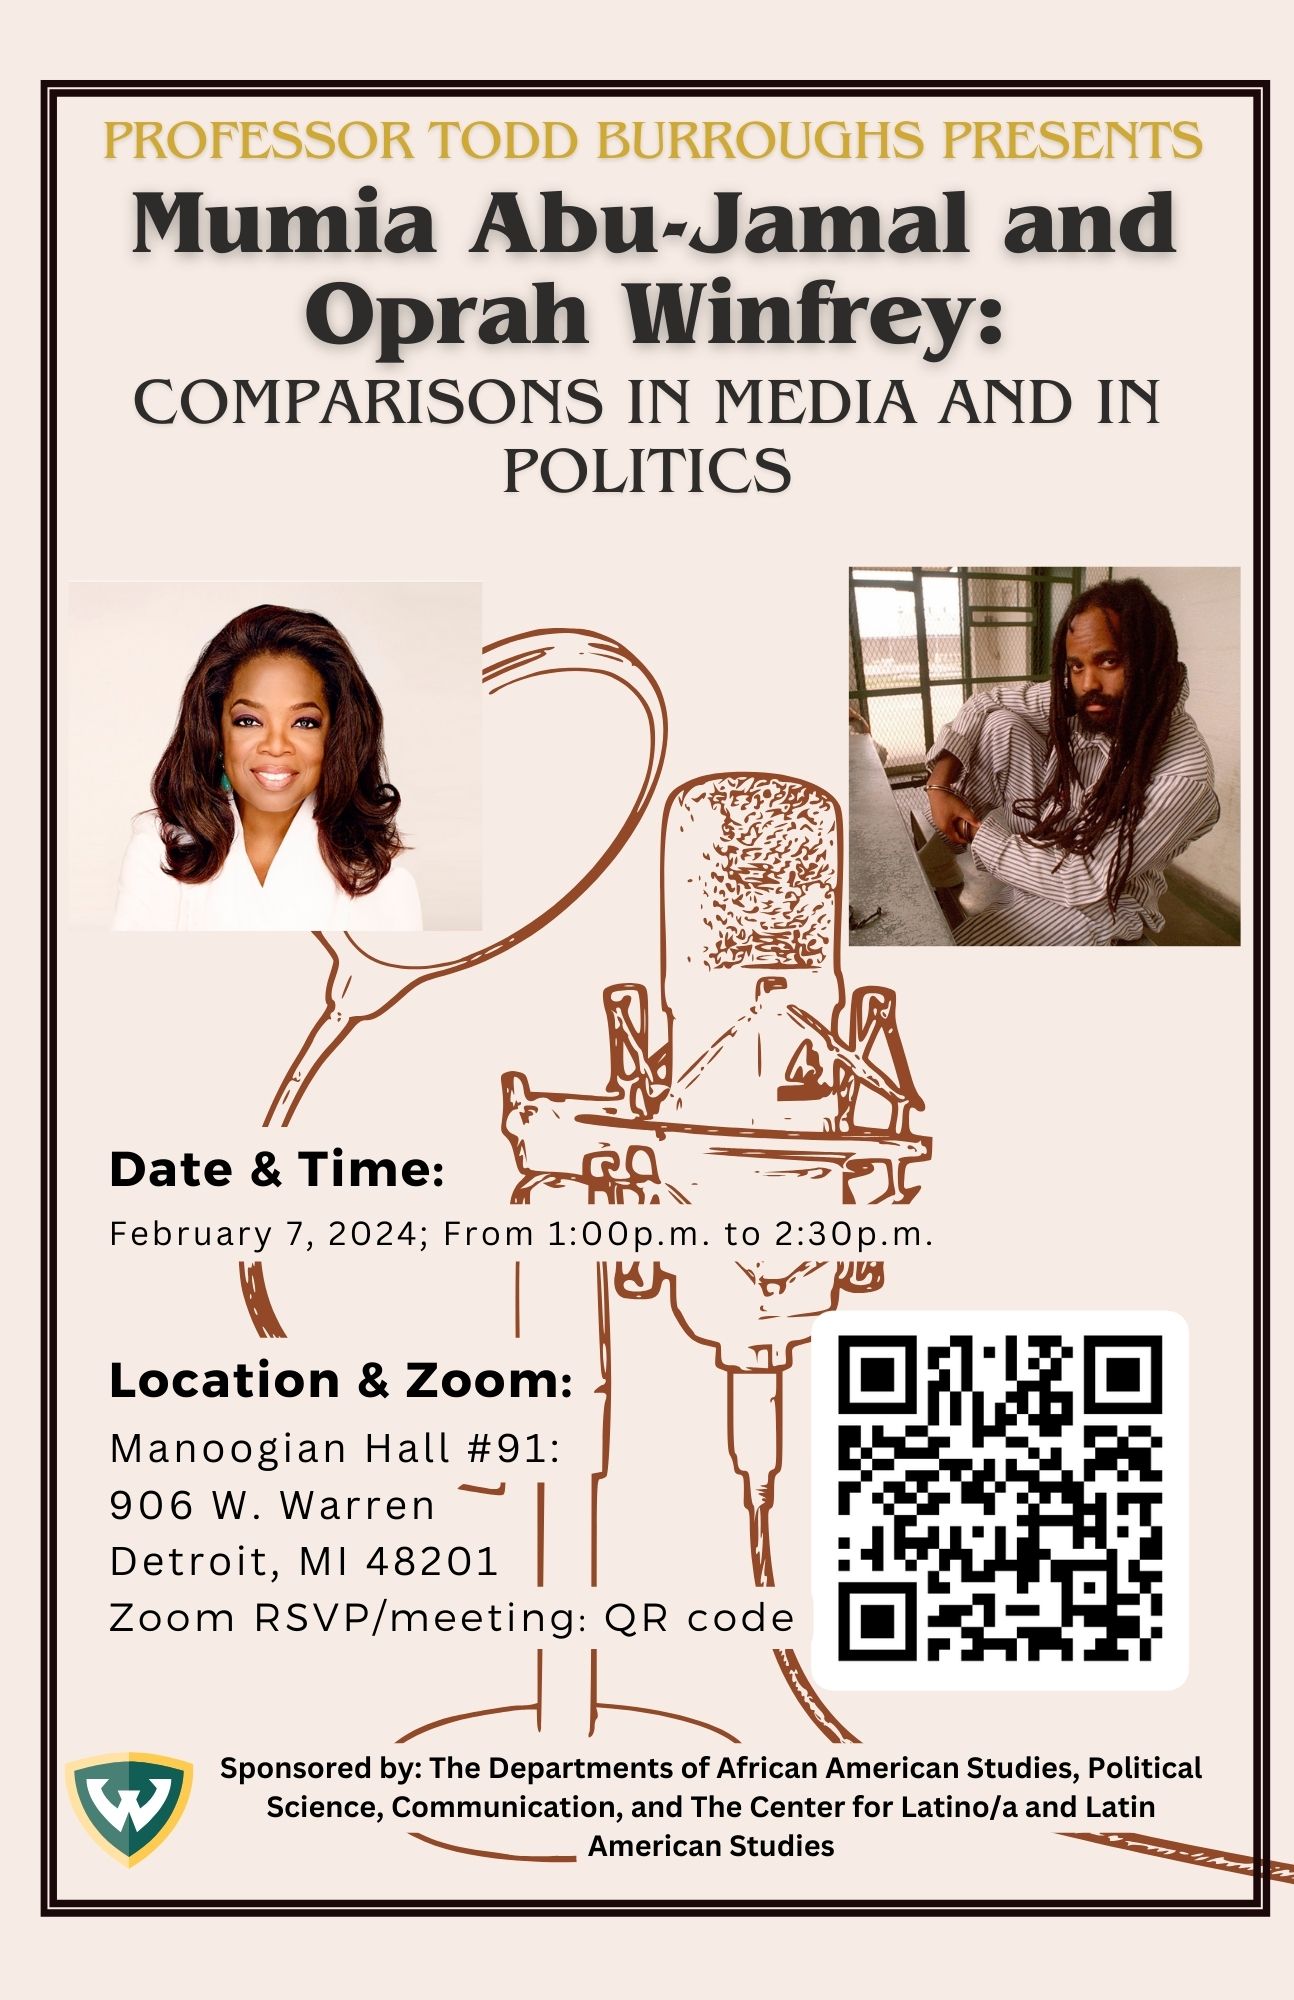 Mumia Abu-Jamal and Oprah Winfrey: Comparisons in media and politics